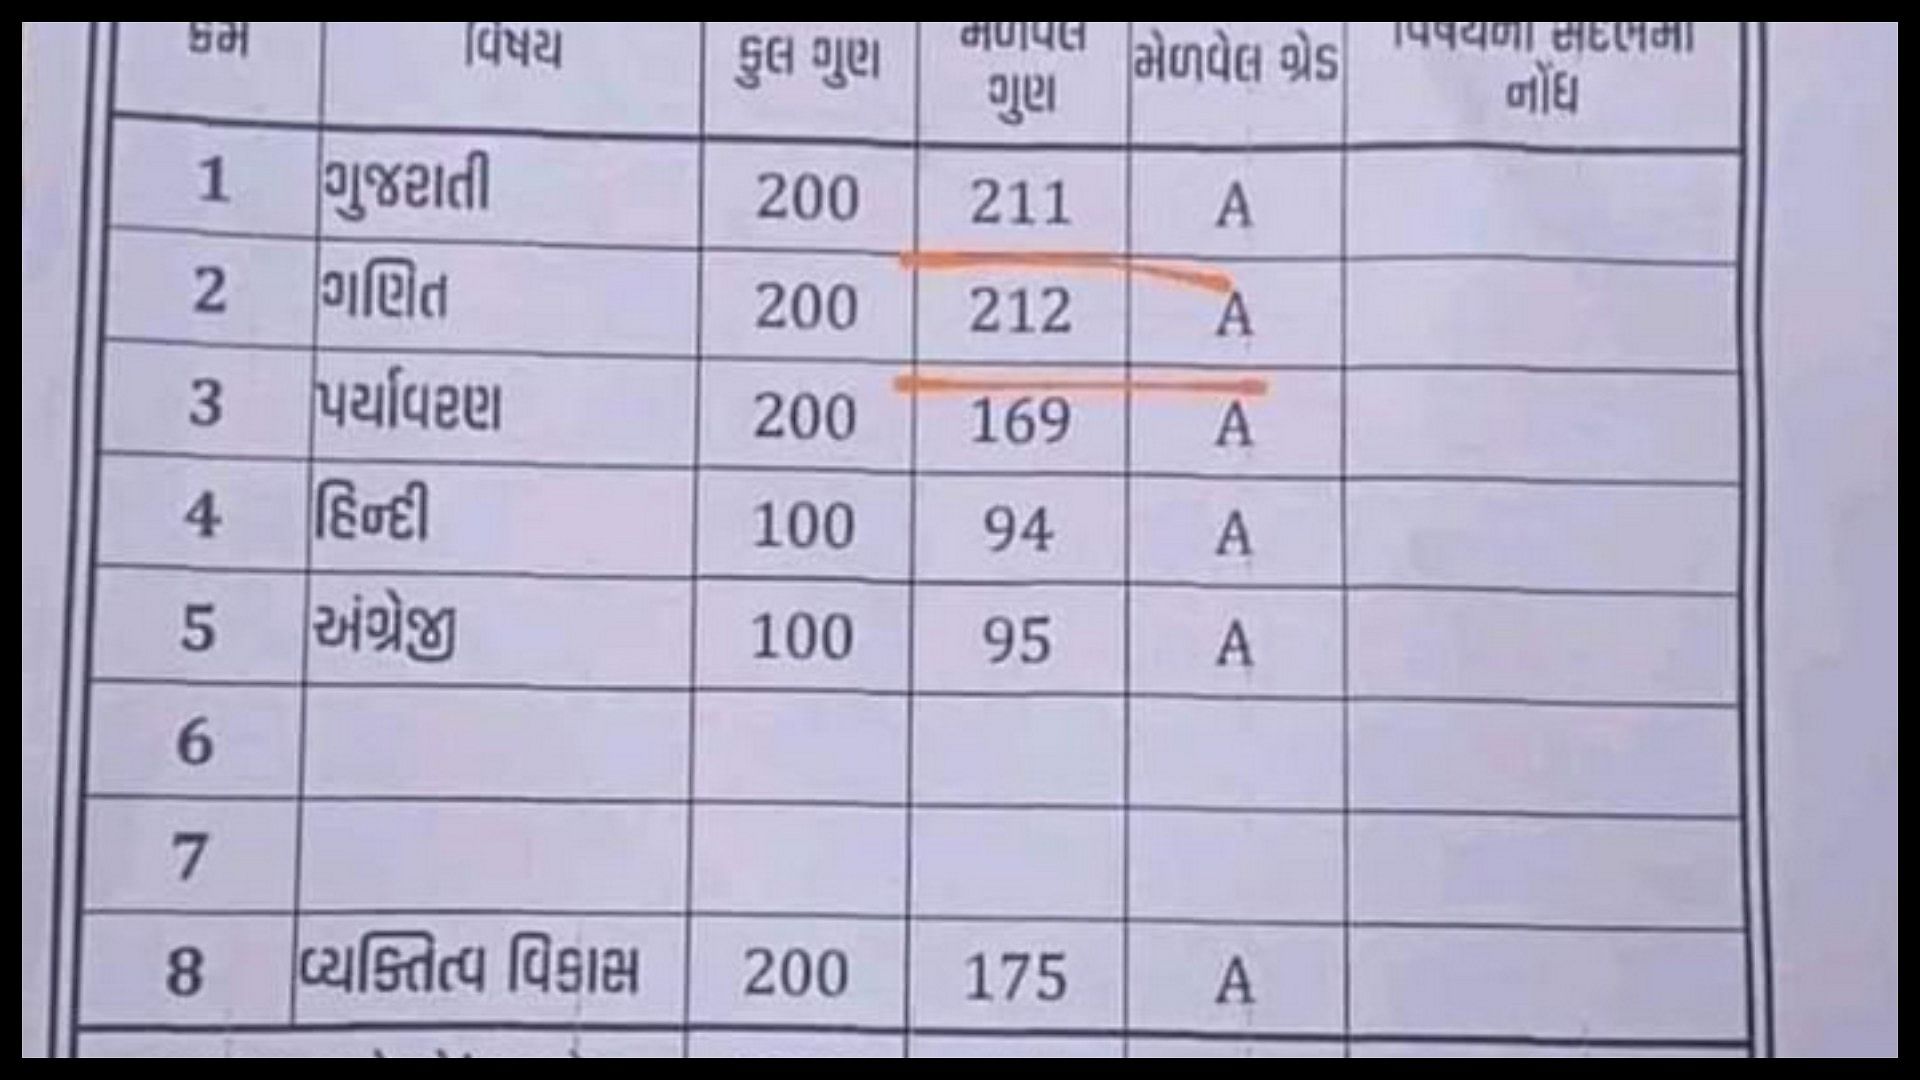 Gujarat primary school student marksheet 212 out of 200 post viral on social media